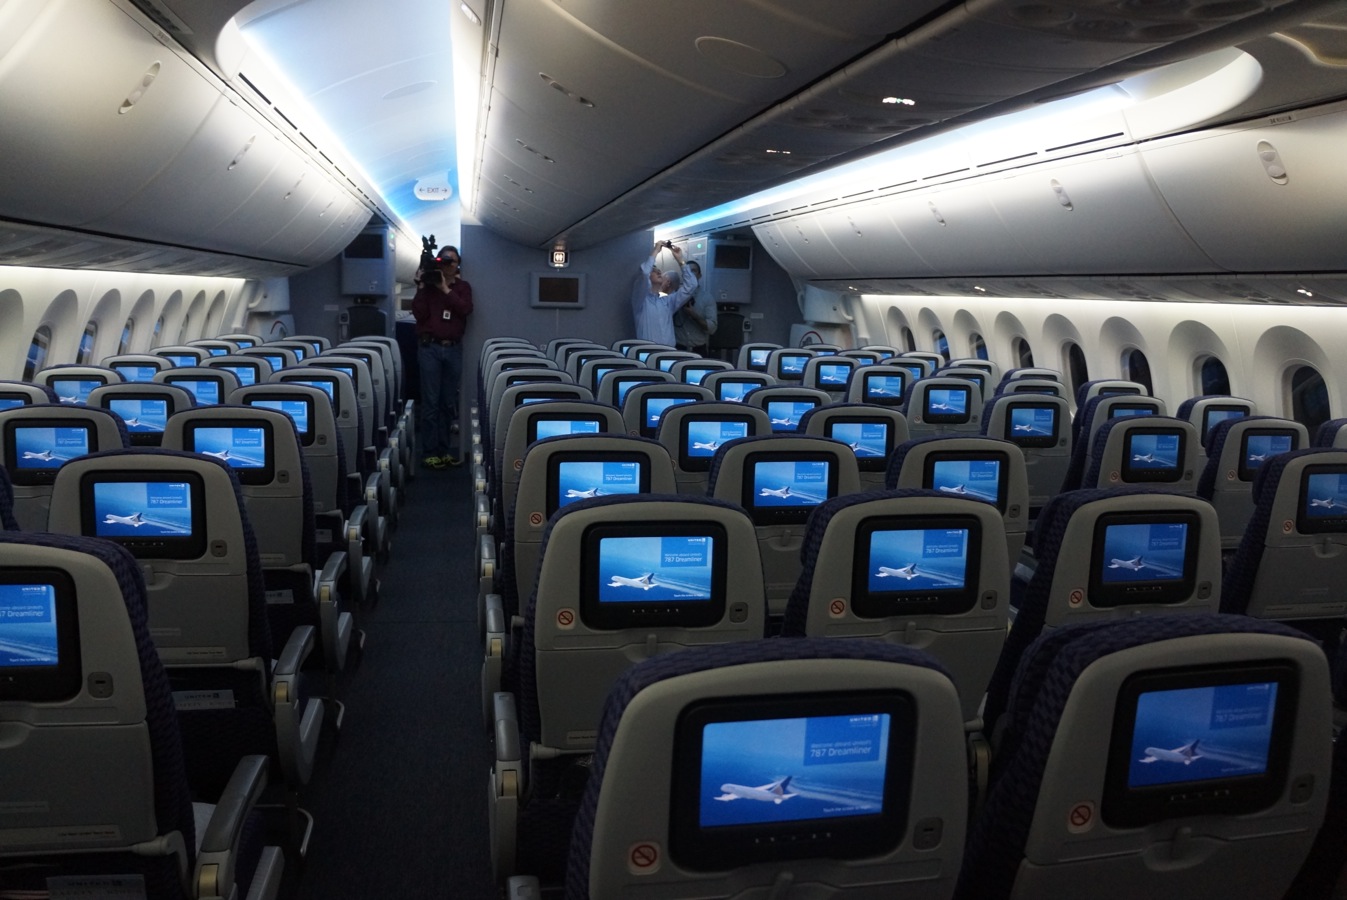 File:ANA Boeing 787-8 Dreamliner cabin LED show.jpg - Wikipedia